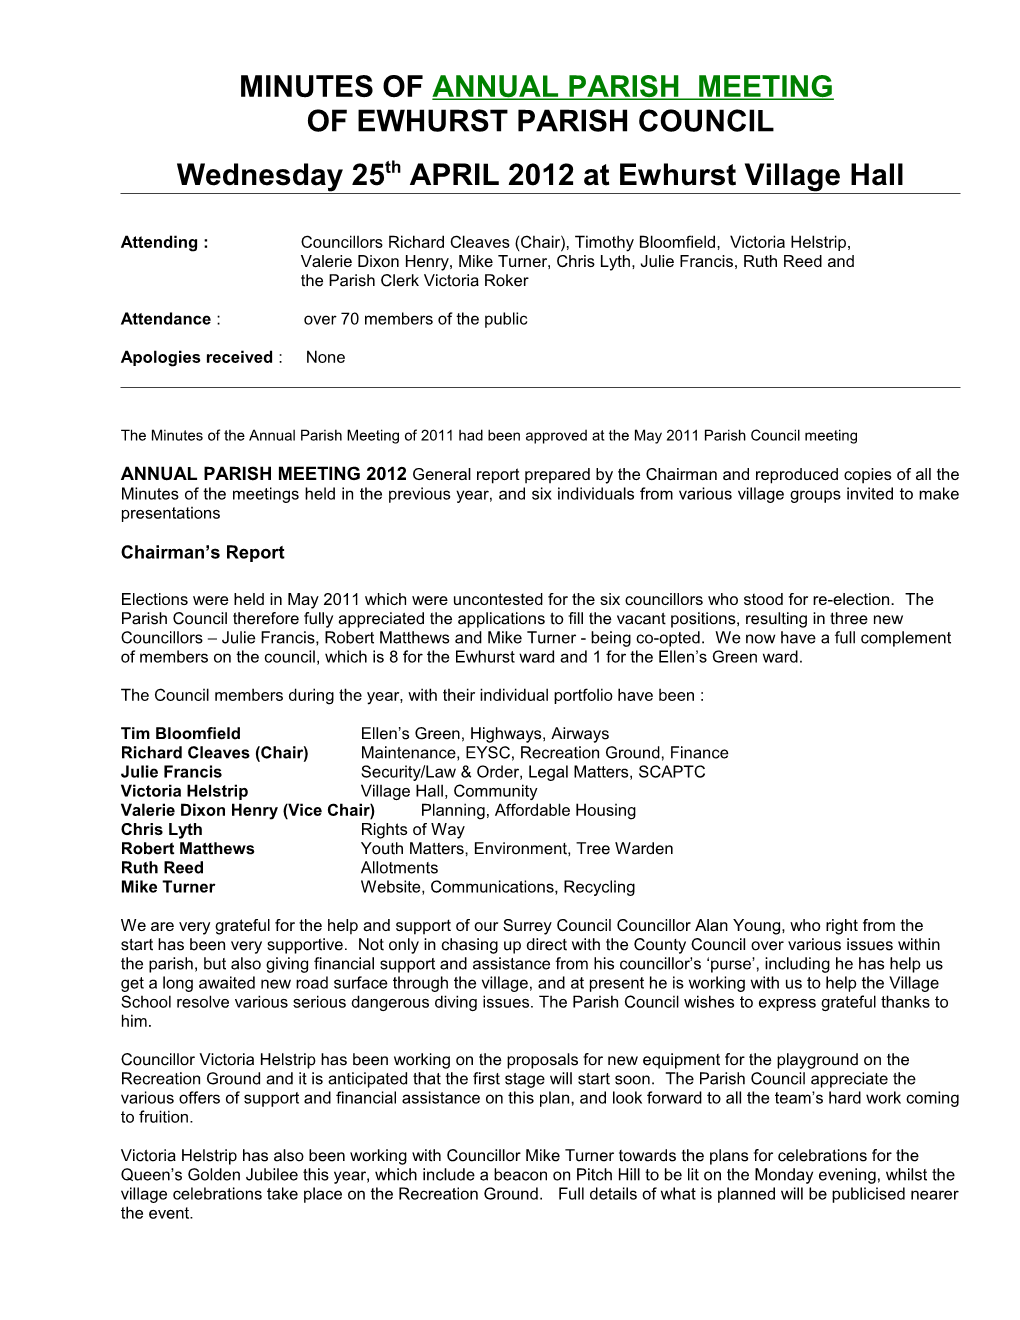 Minutes of Meeting of Ewhurst Parish Council s1